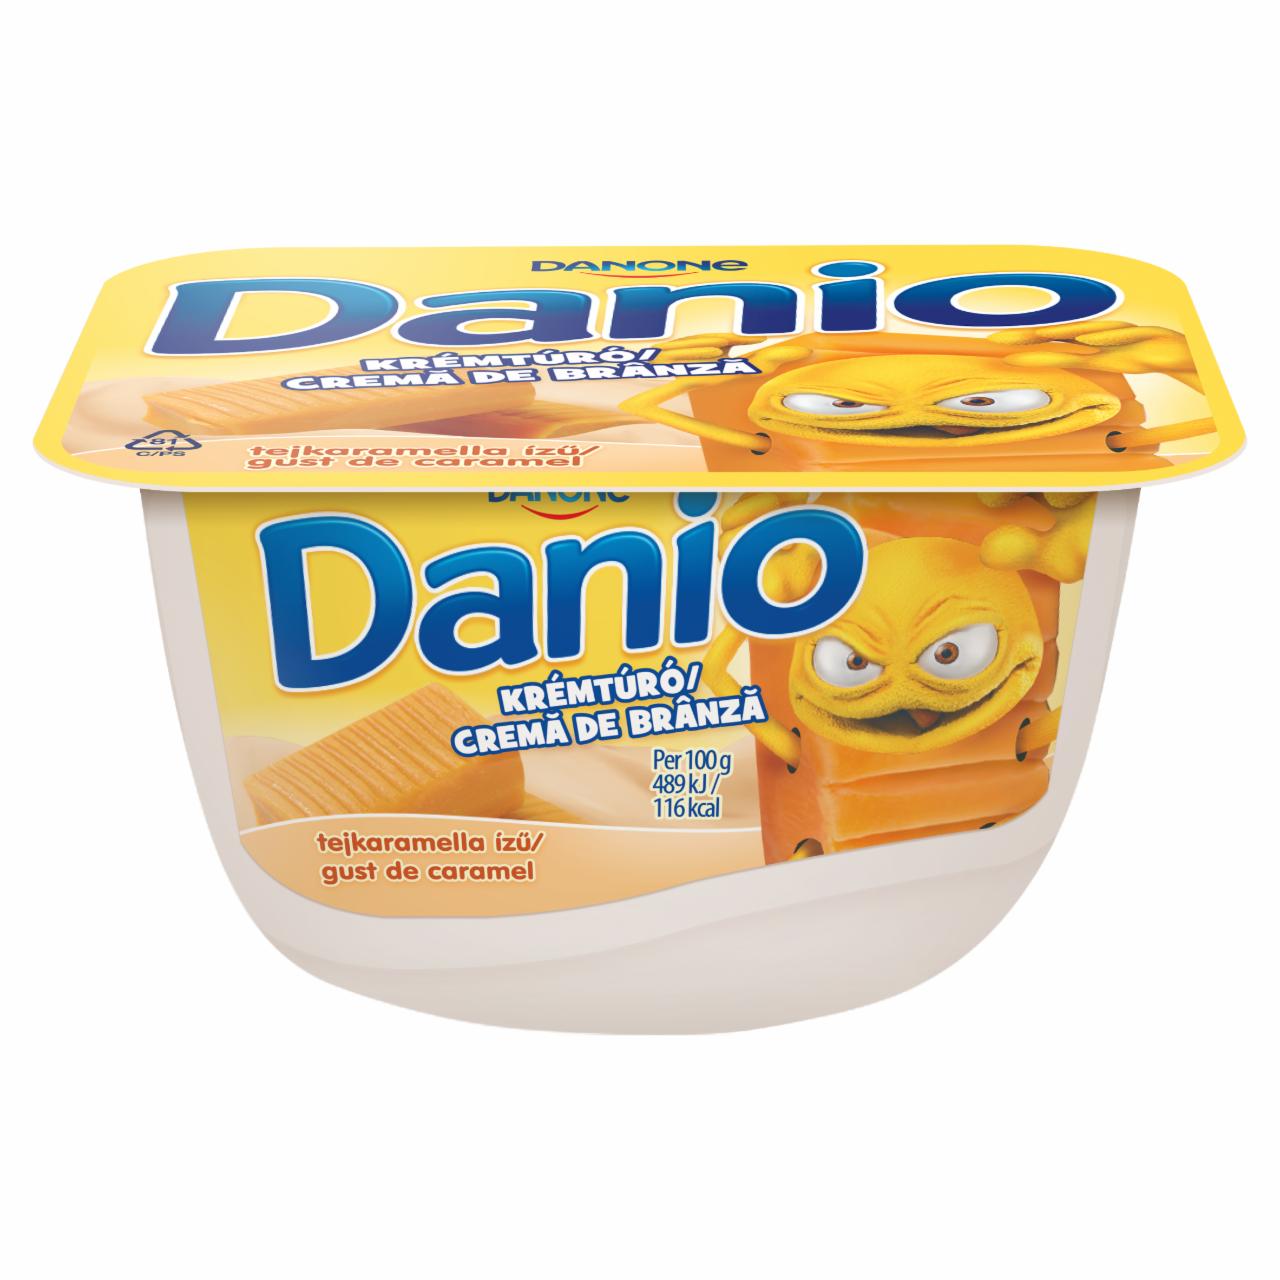 Képek - Danone Danio tejkaramella ízű krémtúró 130 g